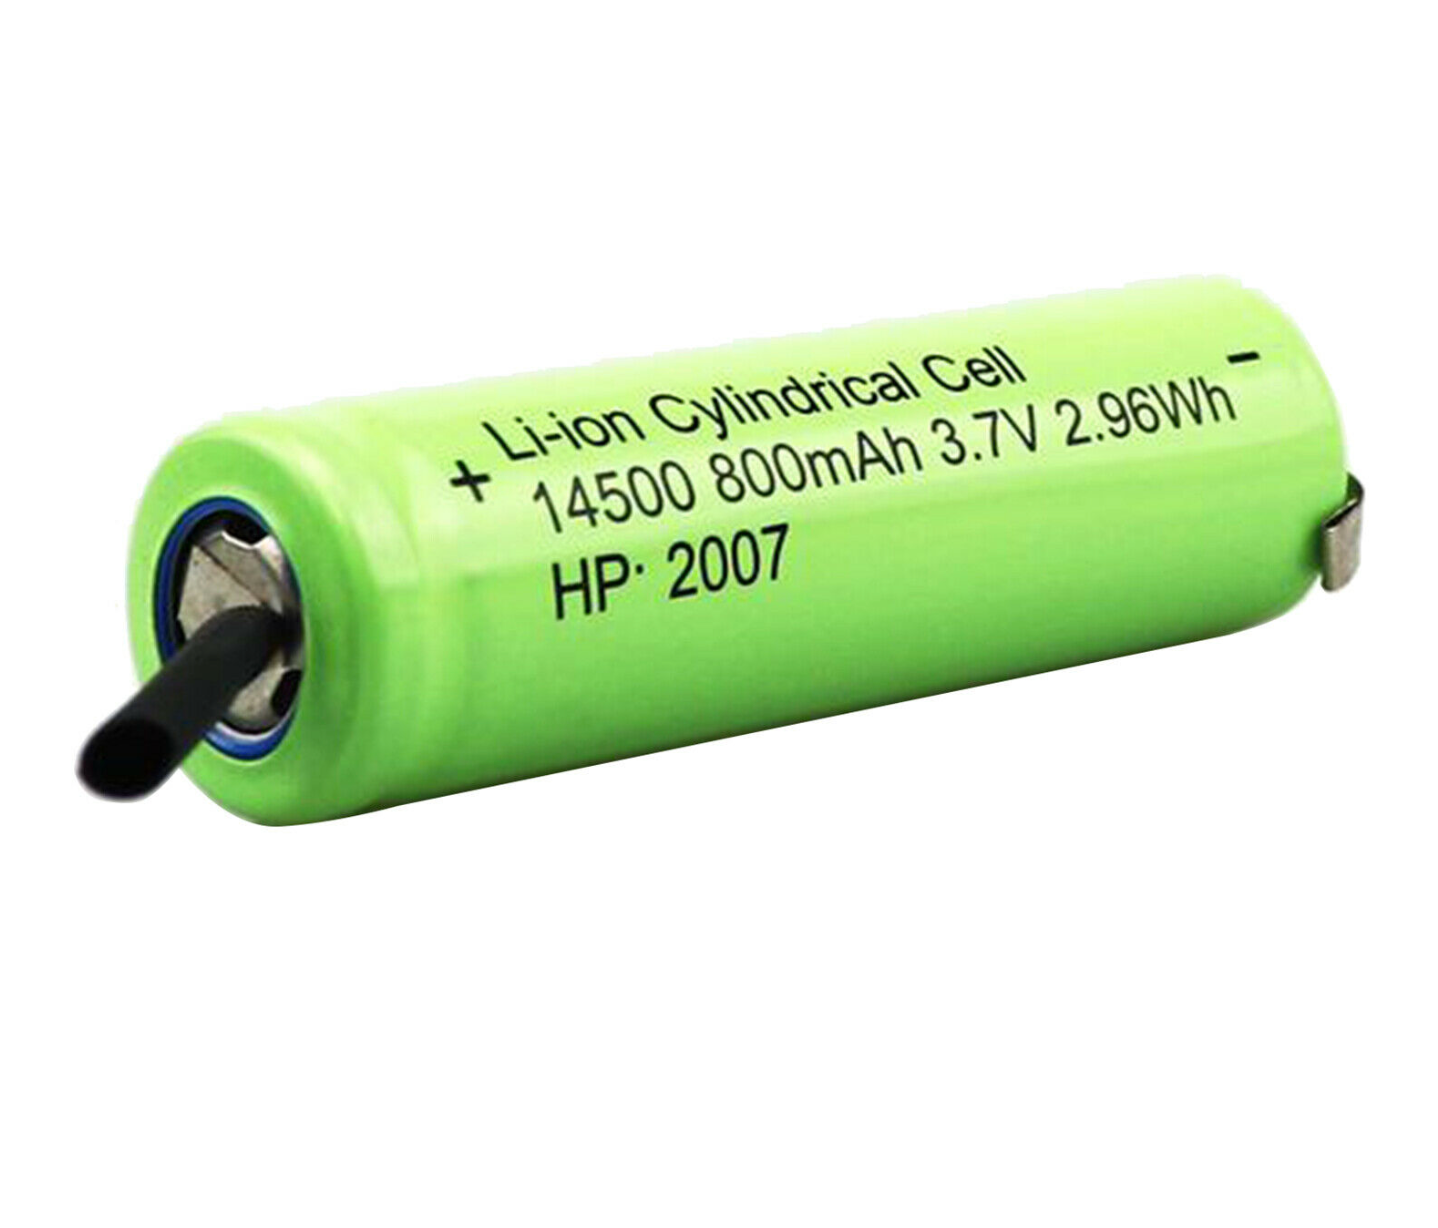 probable Pisoteando masa Andis battery for Slimline li cordless +14500 800mah 3.7v 2.96wh-hp 20